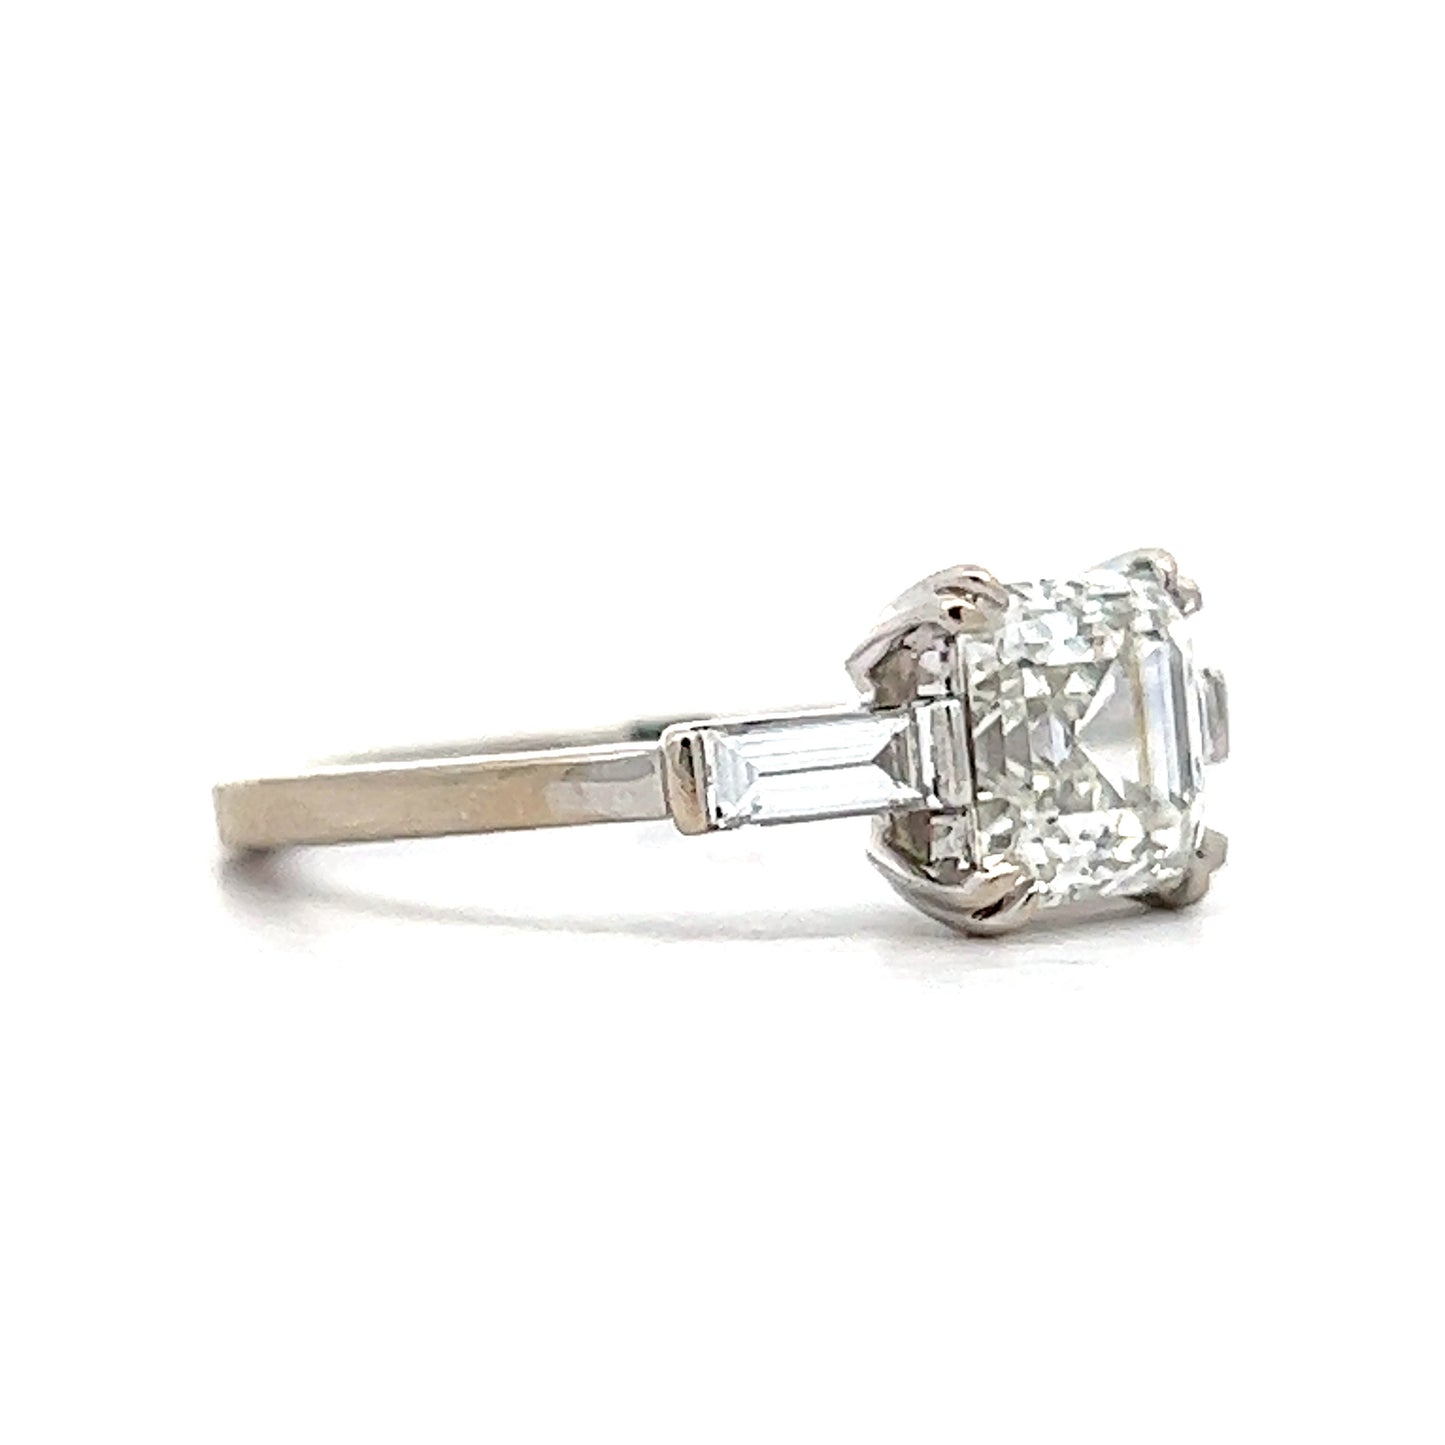 1.71 Asscher Diamond Engagement Ring in 18k White Gold